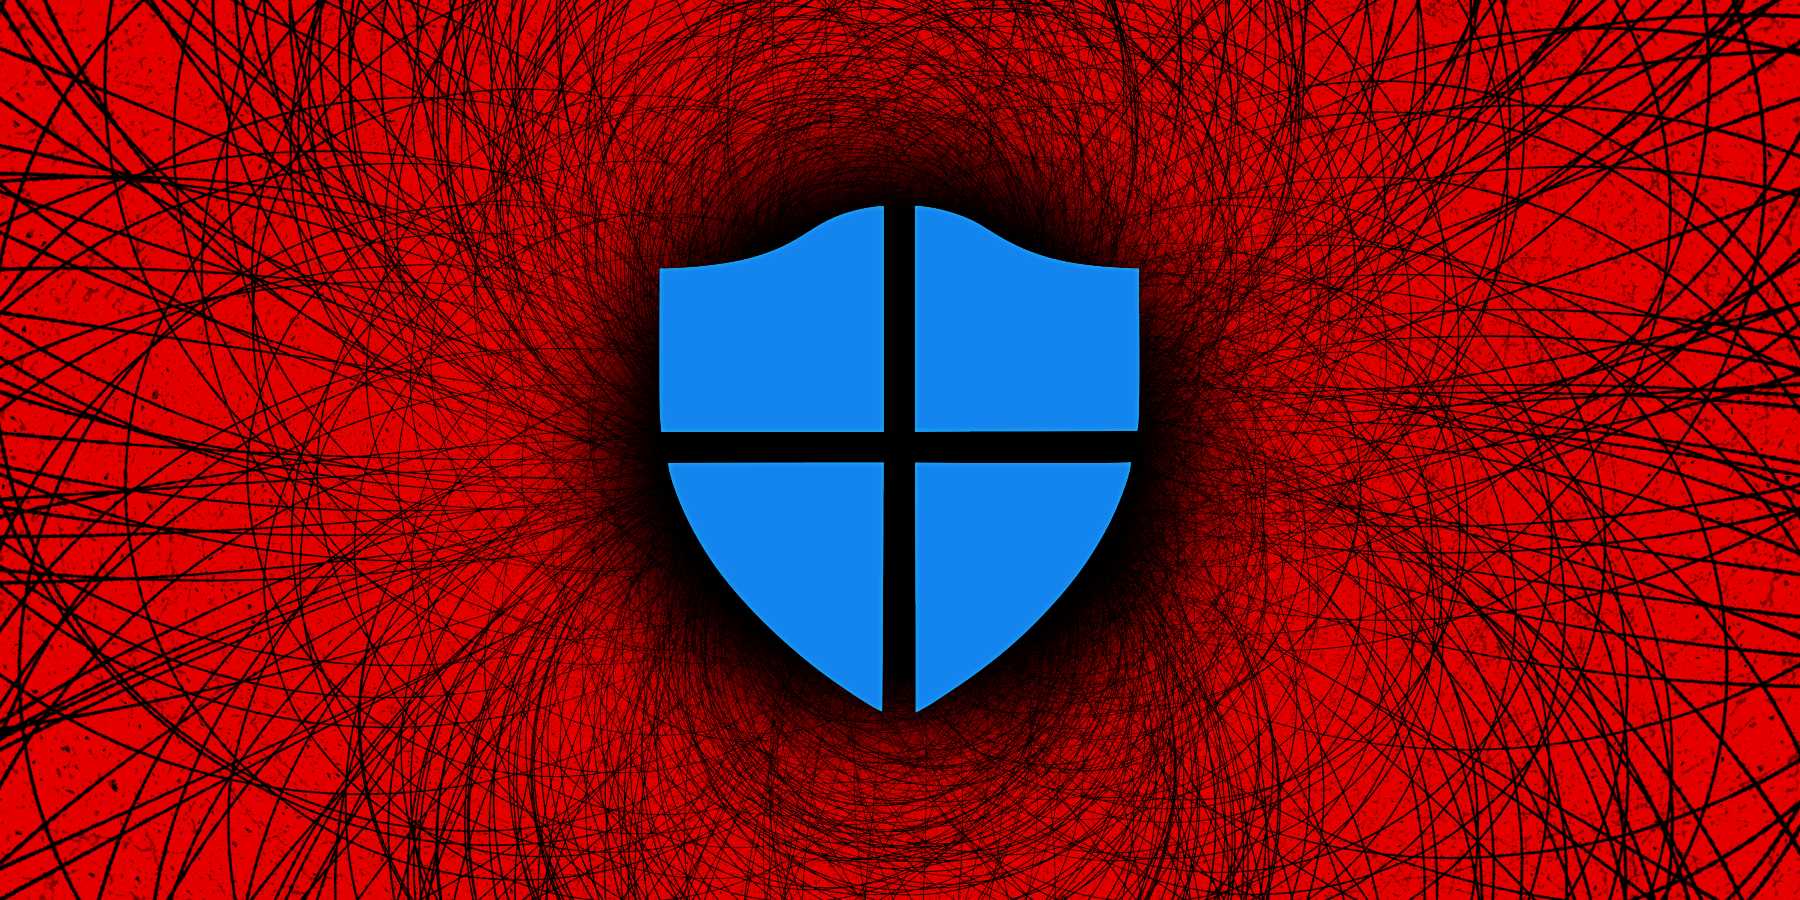 Windows vulnerability